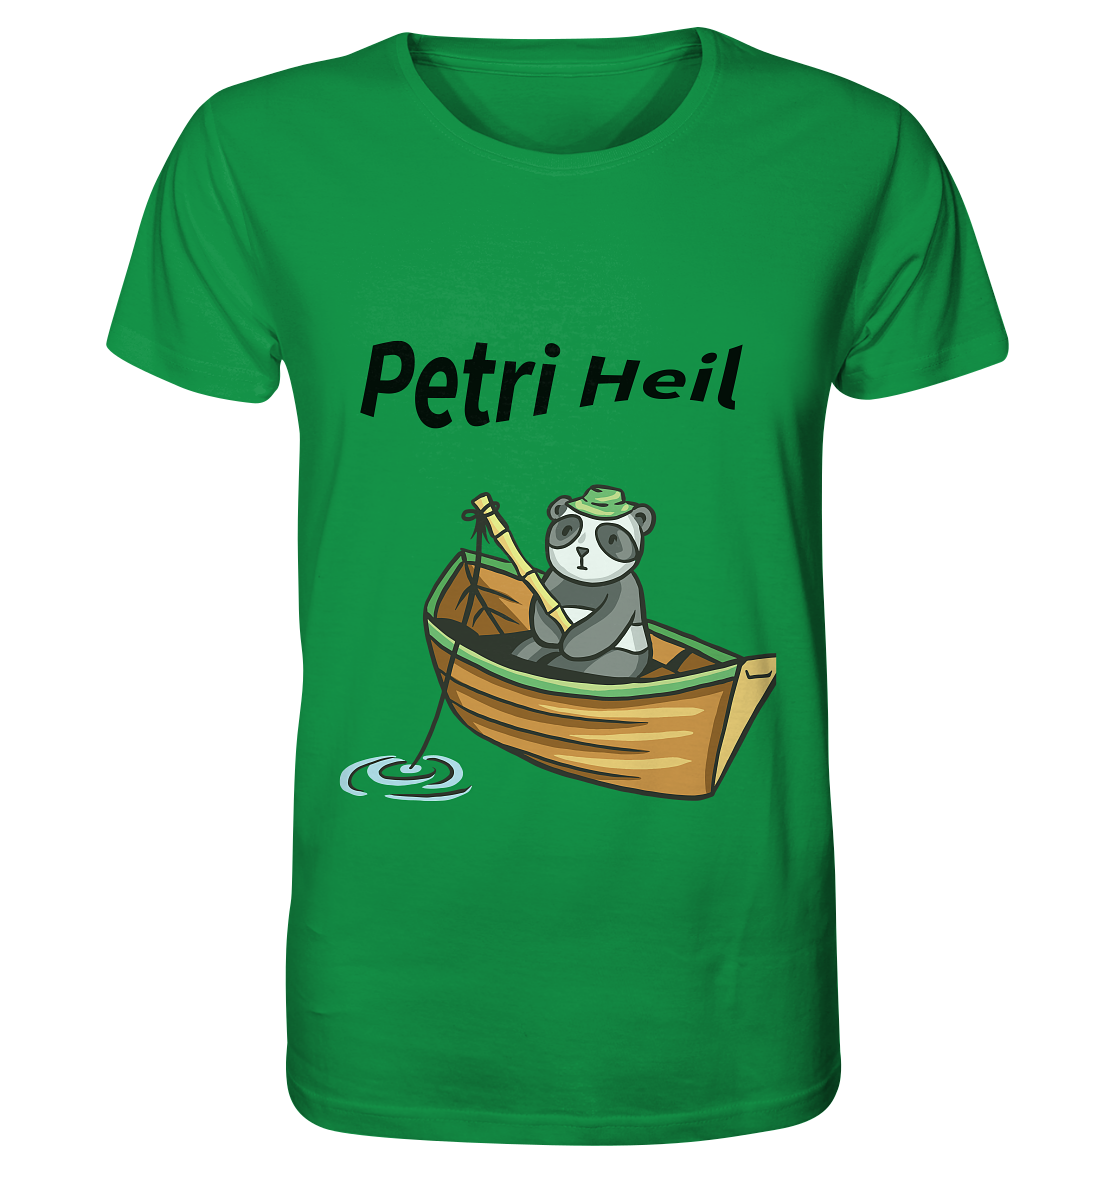 Petri-Heil-Bär - Organic Shirt - Online Kaufhaus München